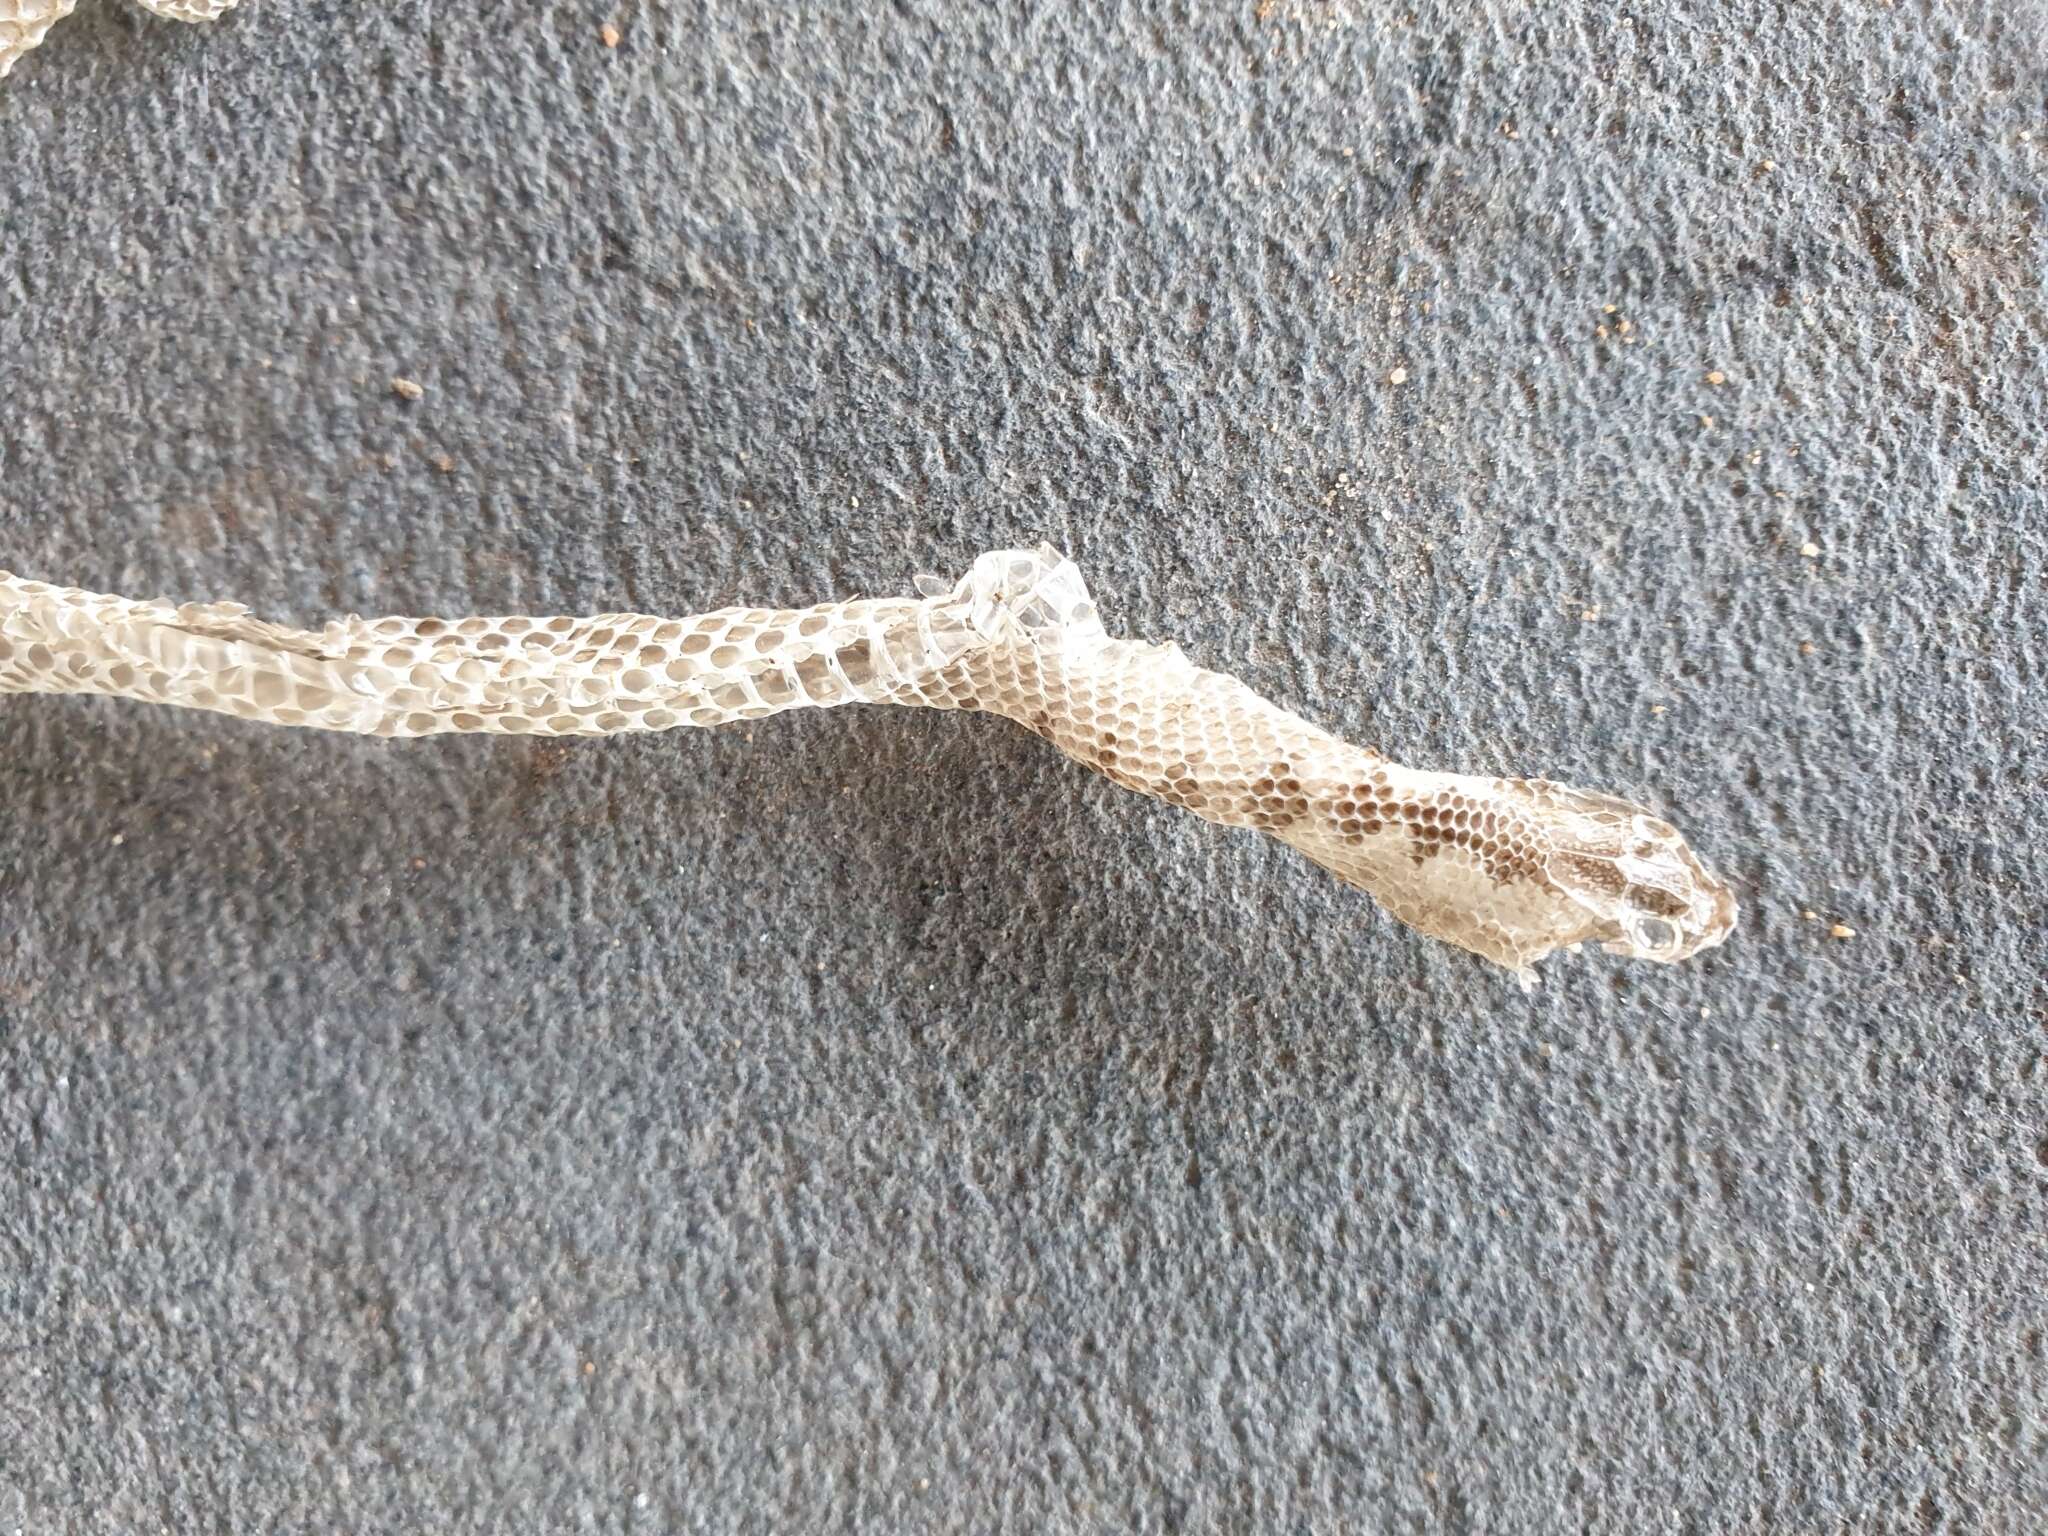 Image of (South-) Eastern Bark Snake